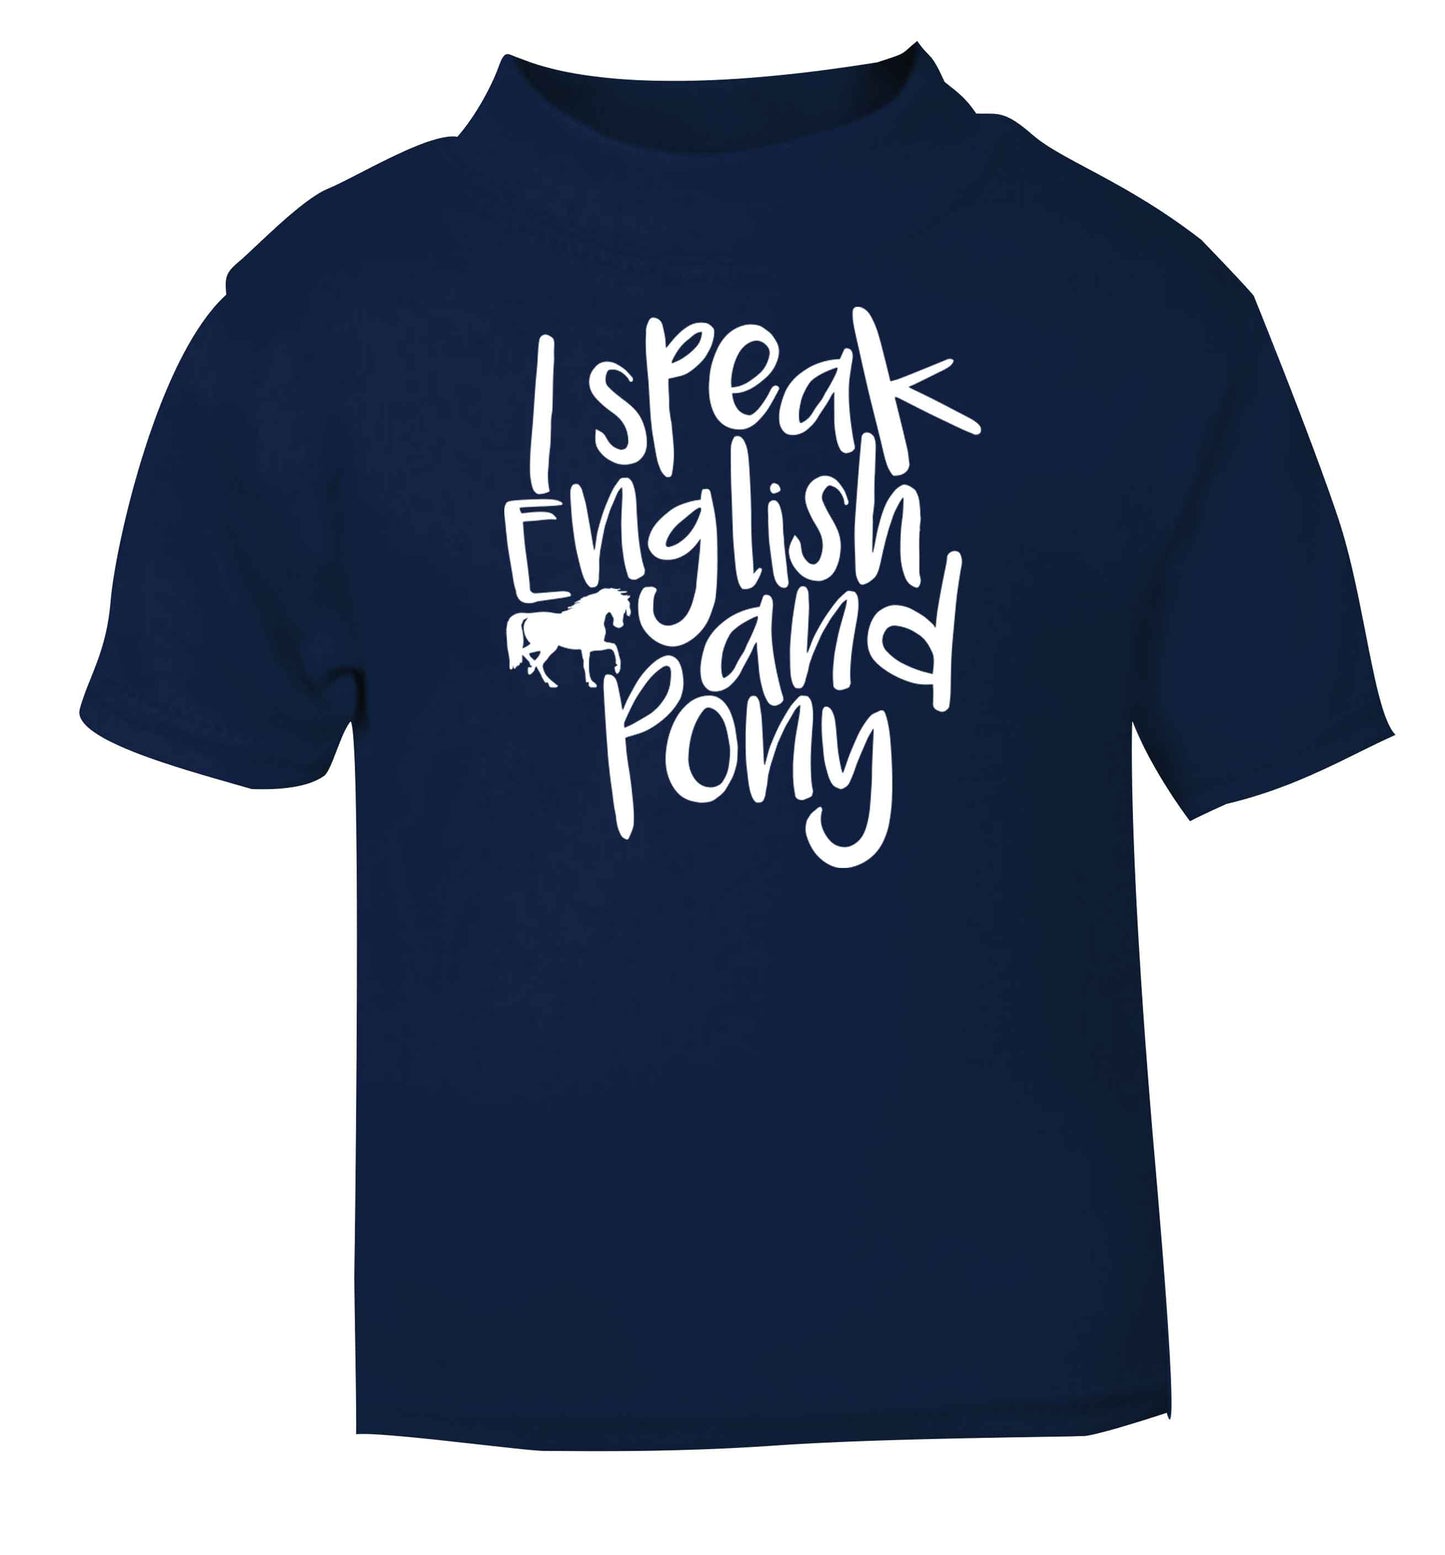 I speak English and pony navy baby toddler Tshirt 2 Years